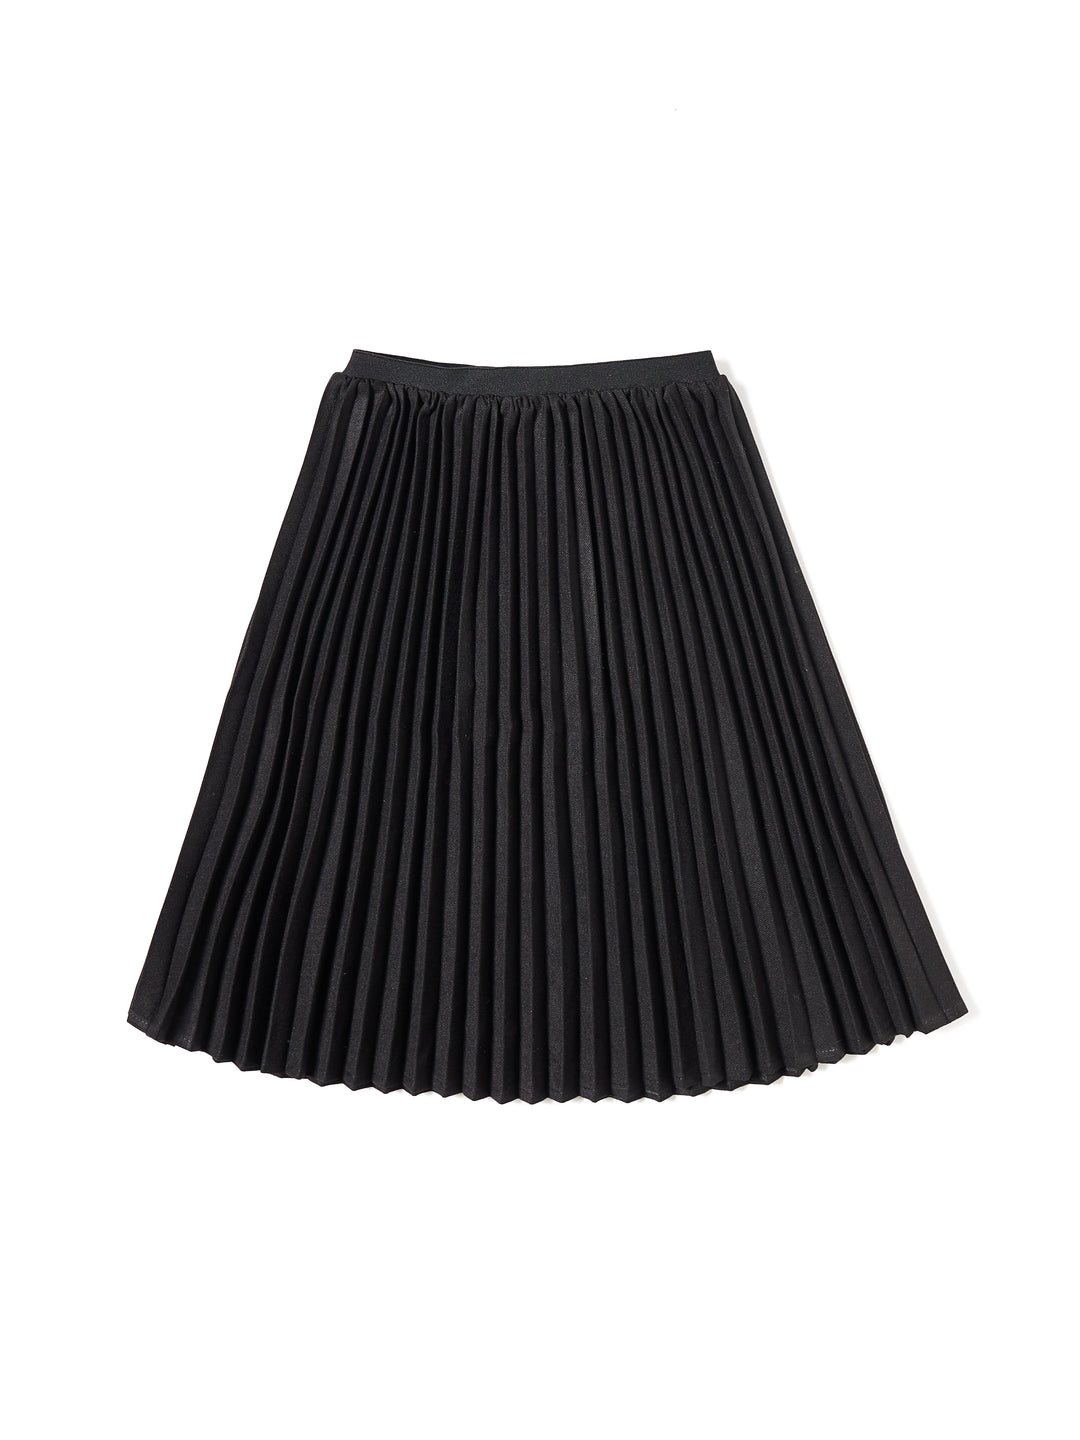 Accordion Pleats Skirt - Black